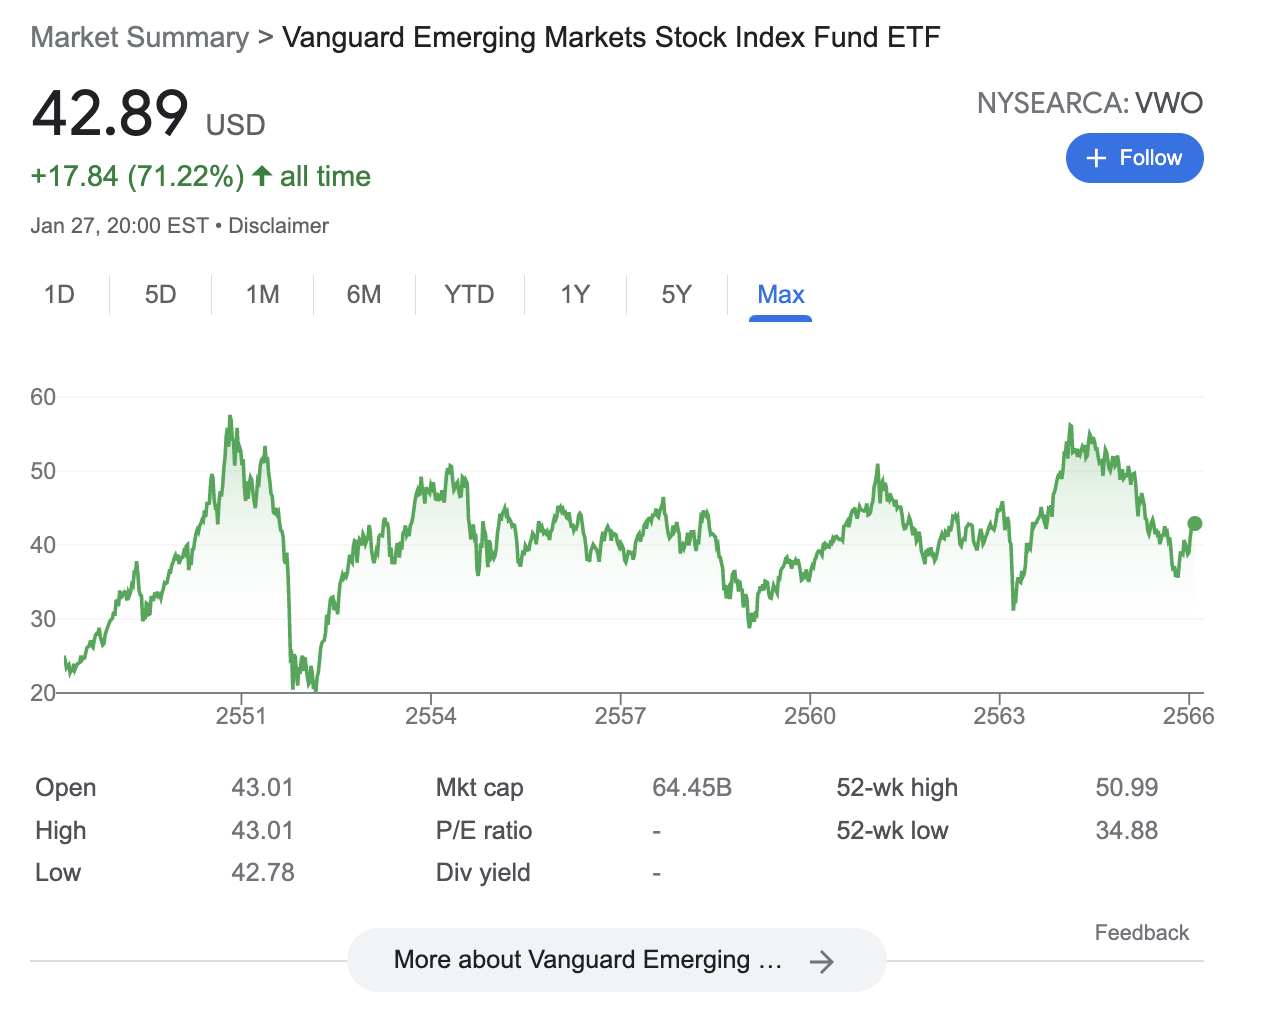 Vanguard FTSE Emerging Markets (VWO